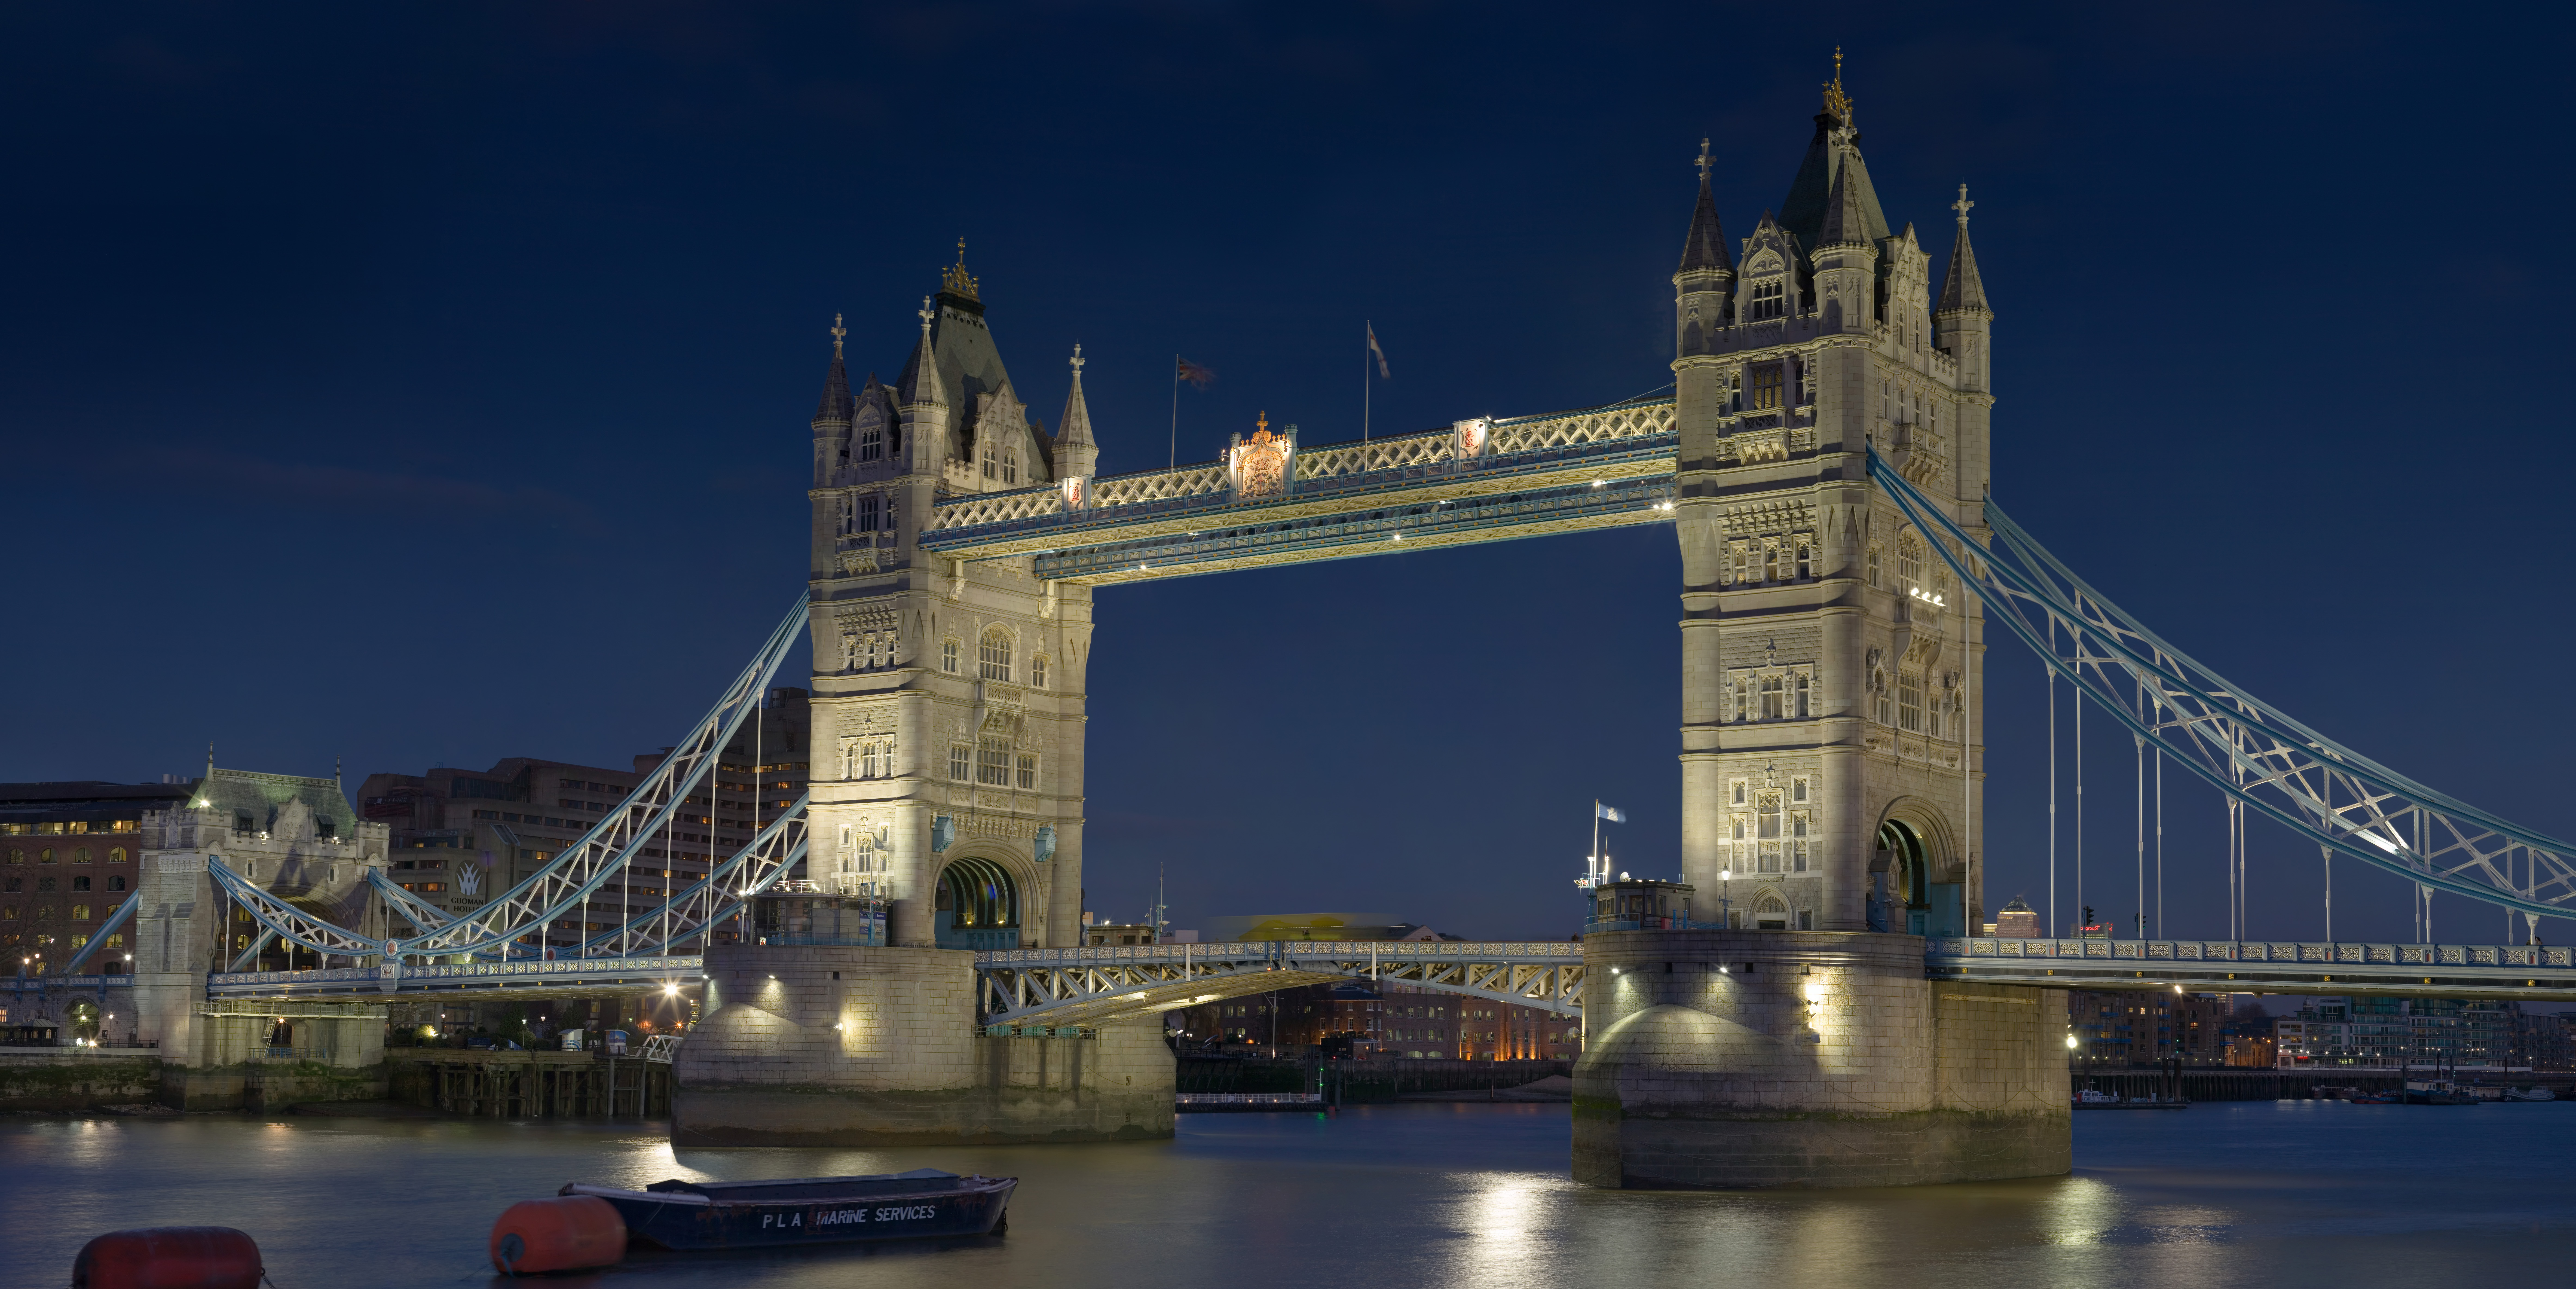 Tower Bridge - Wikipedia